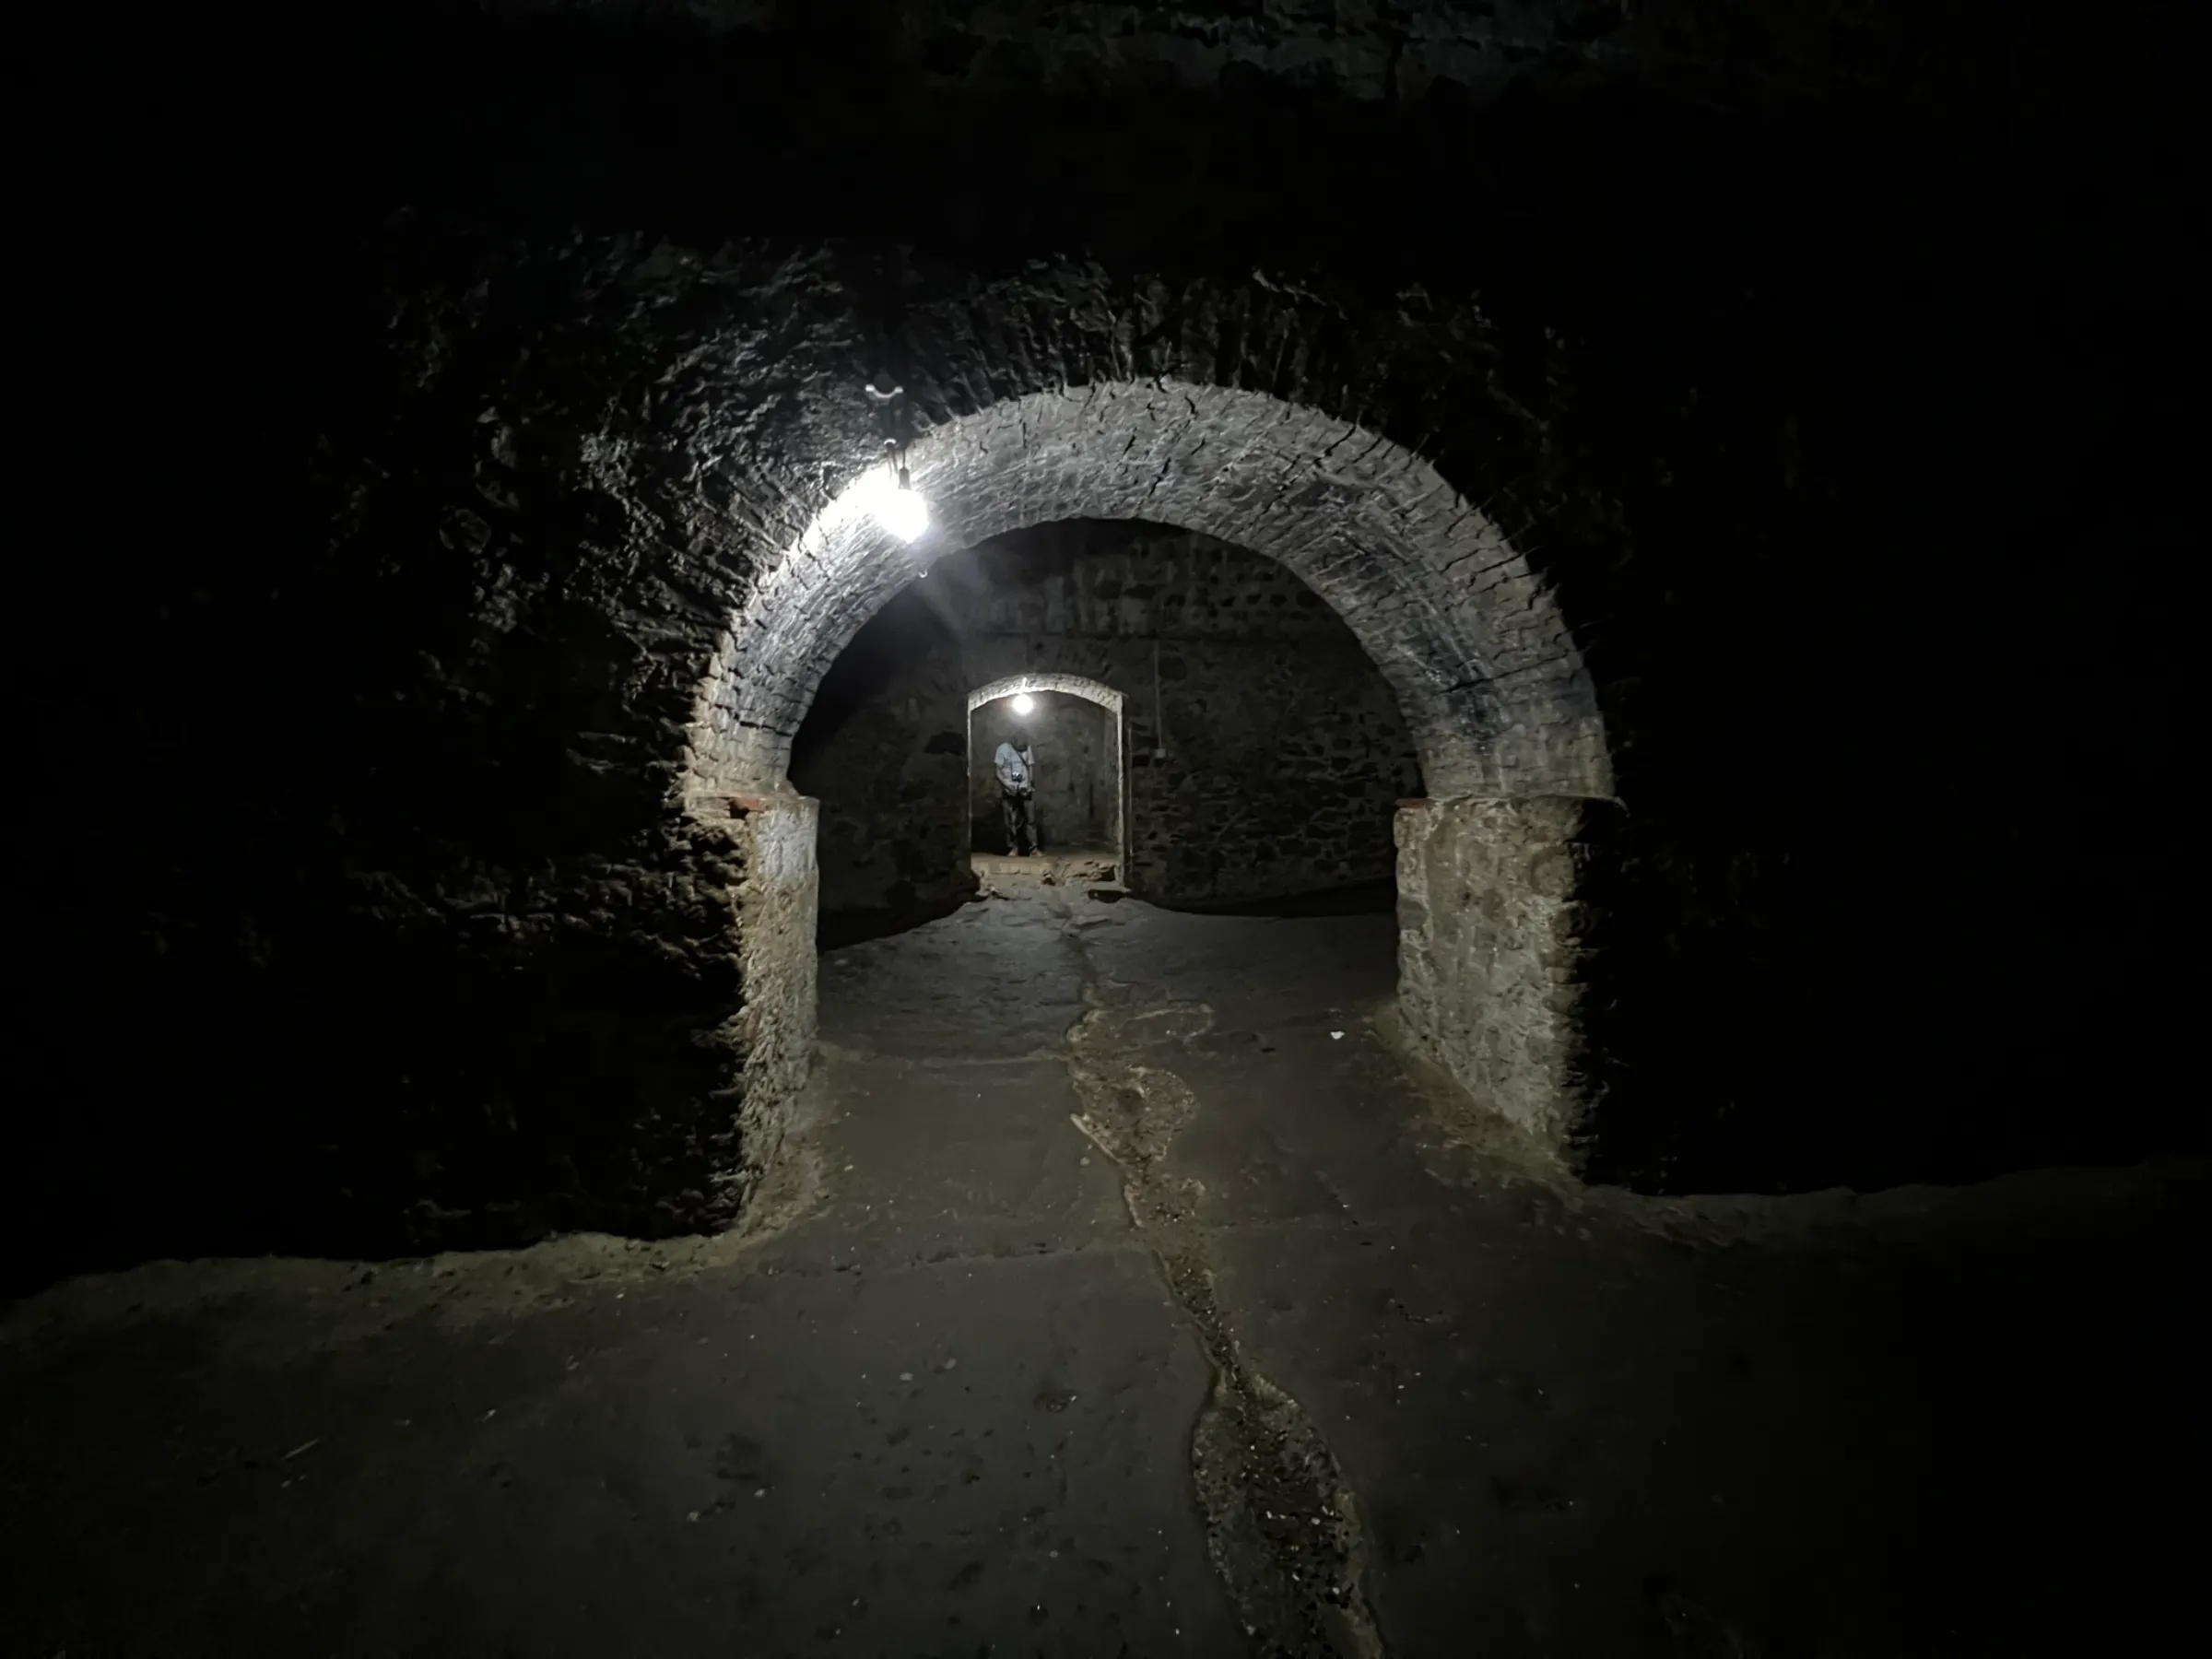 Inside the male dungeons of Cape Coast Castle on the Cape Coast, Ghana on Aug 9, 2022